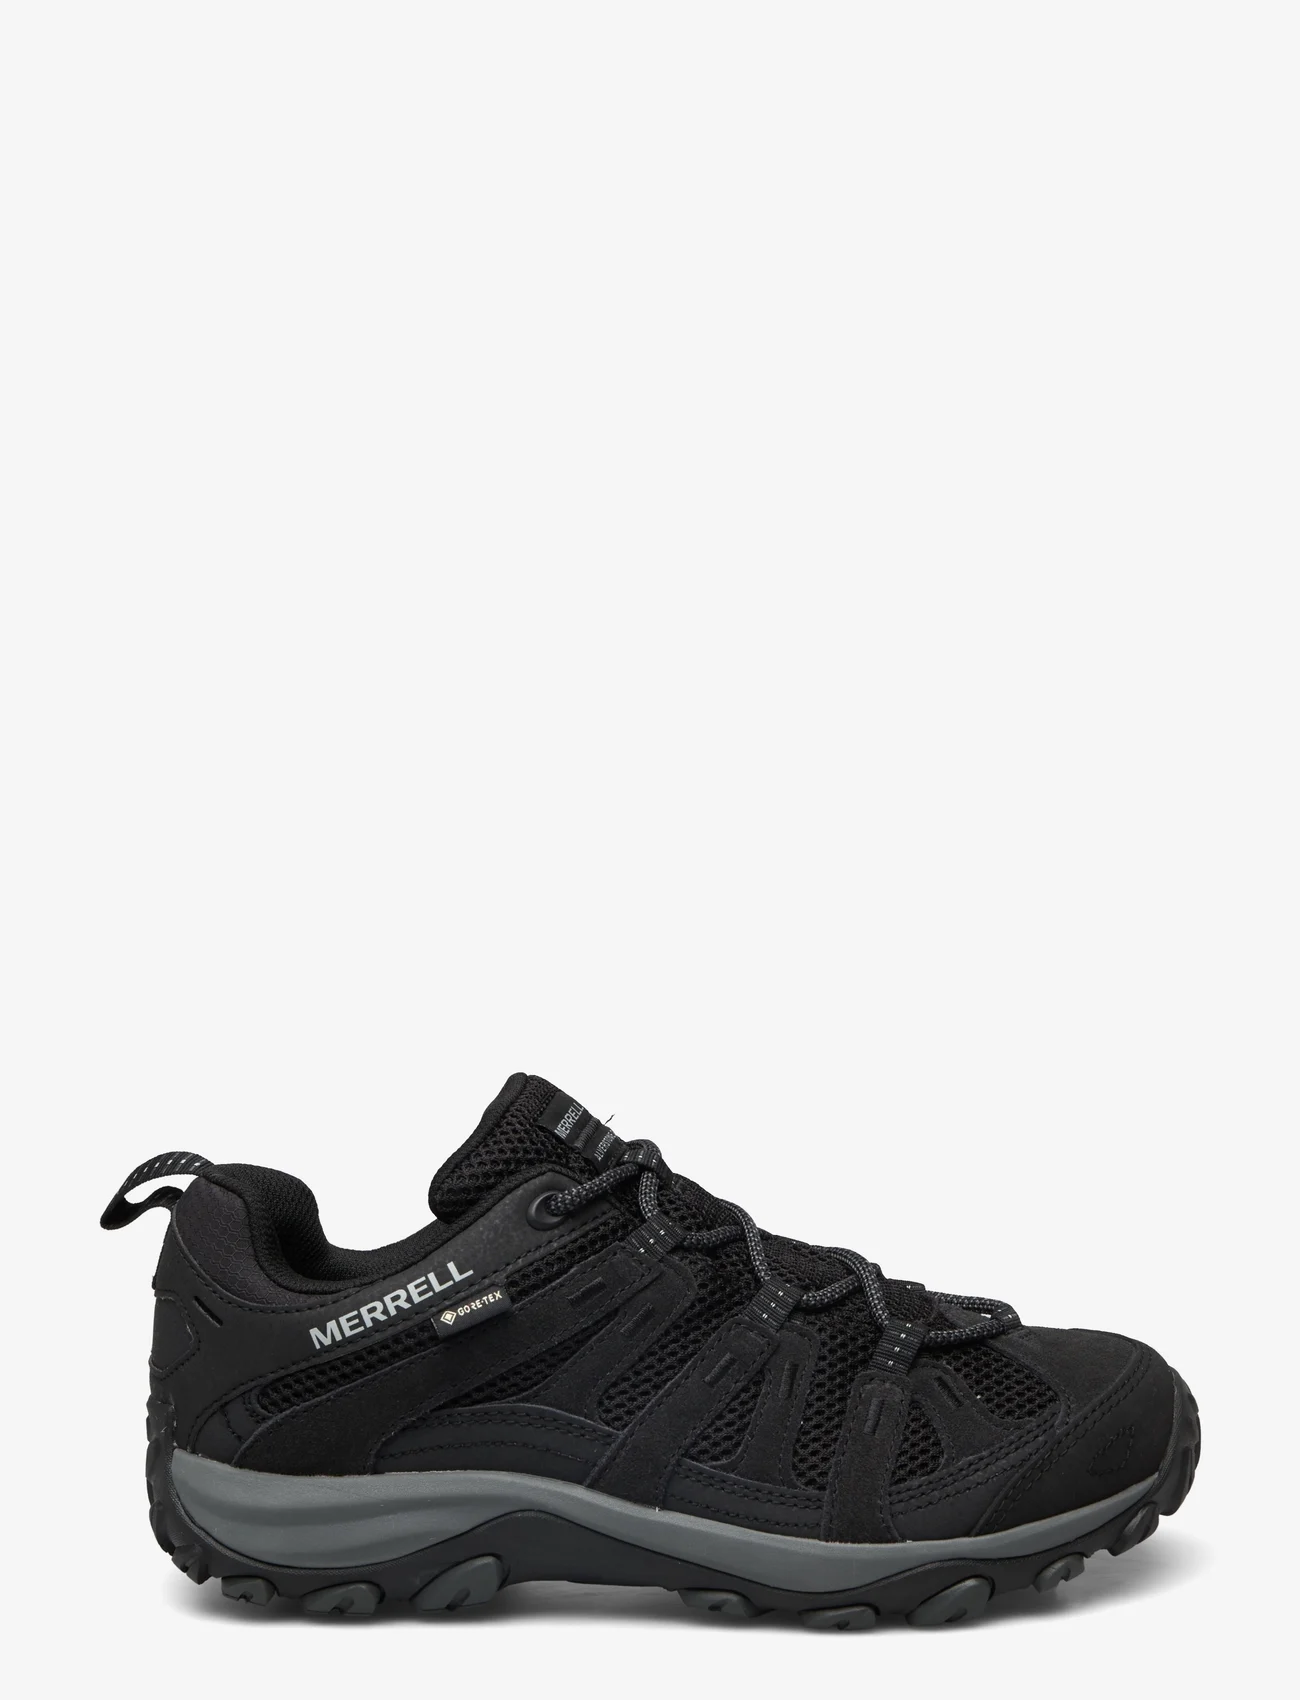 Merrell - Men's Alverstone 2 GTX - Black/Blac - hiking shoes - black/black - 1